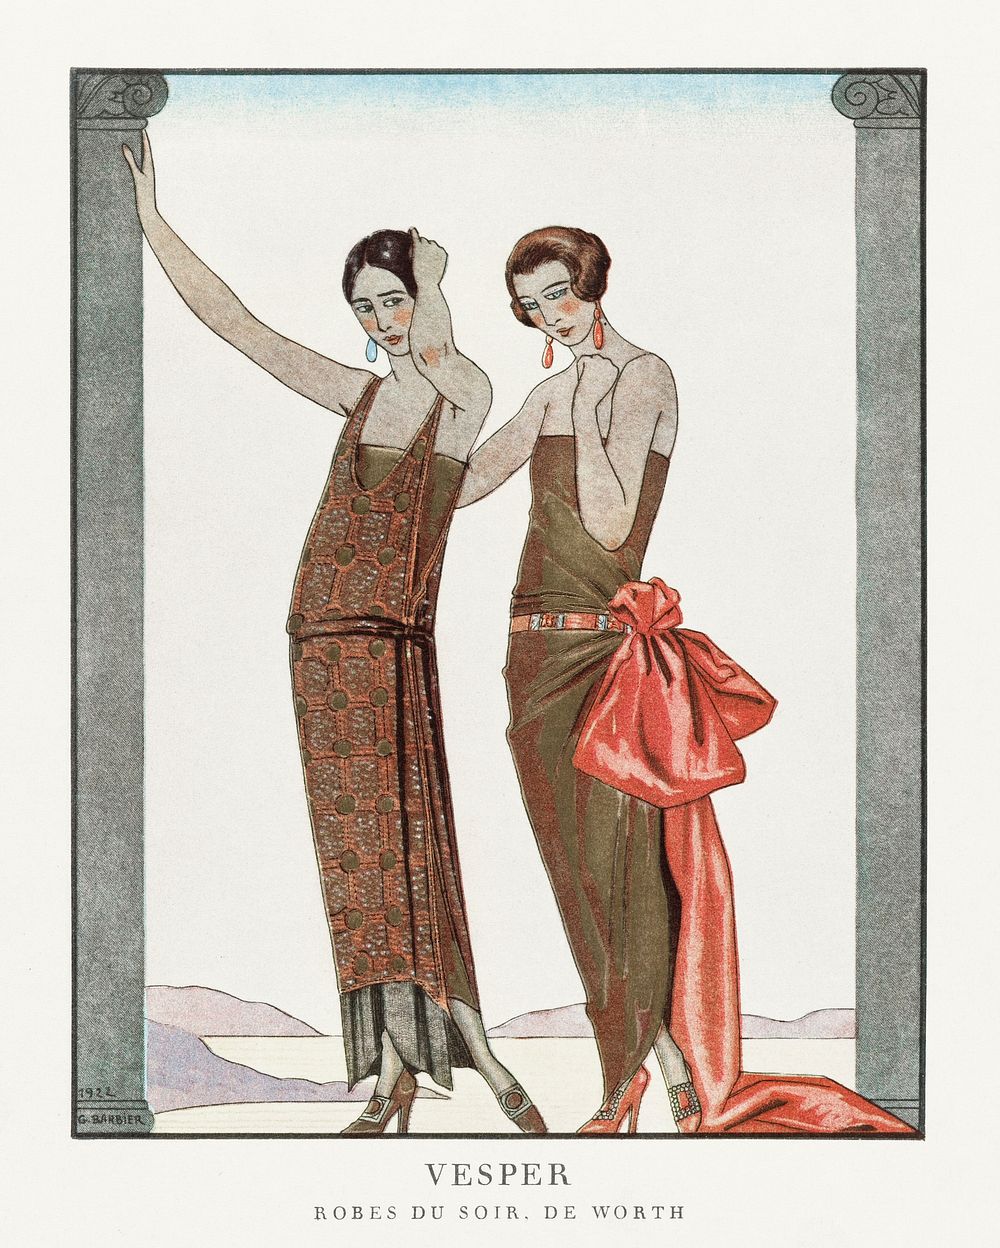 Vesper / Robes du soir, de Worth from Gazette du Bon Ton No. 8 (1922) fashion illustration in high resolution by George…